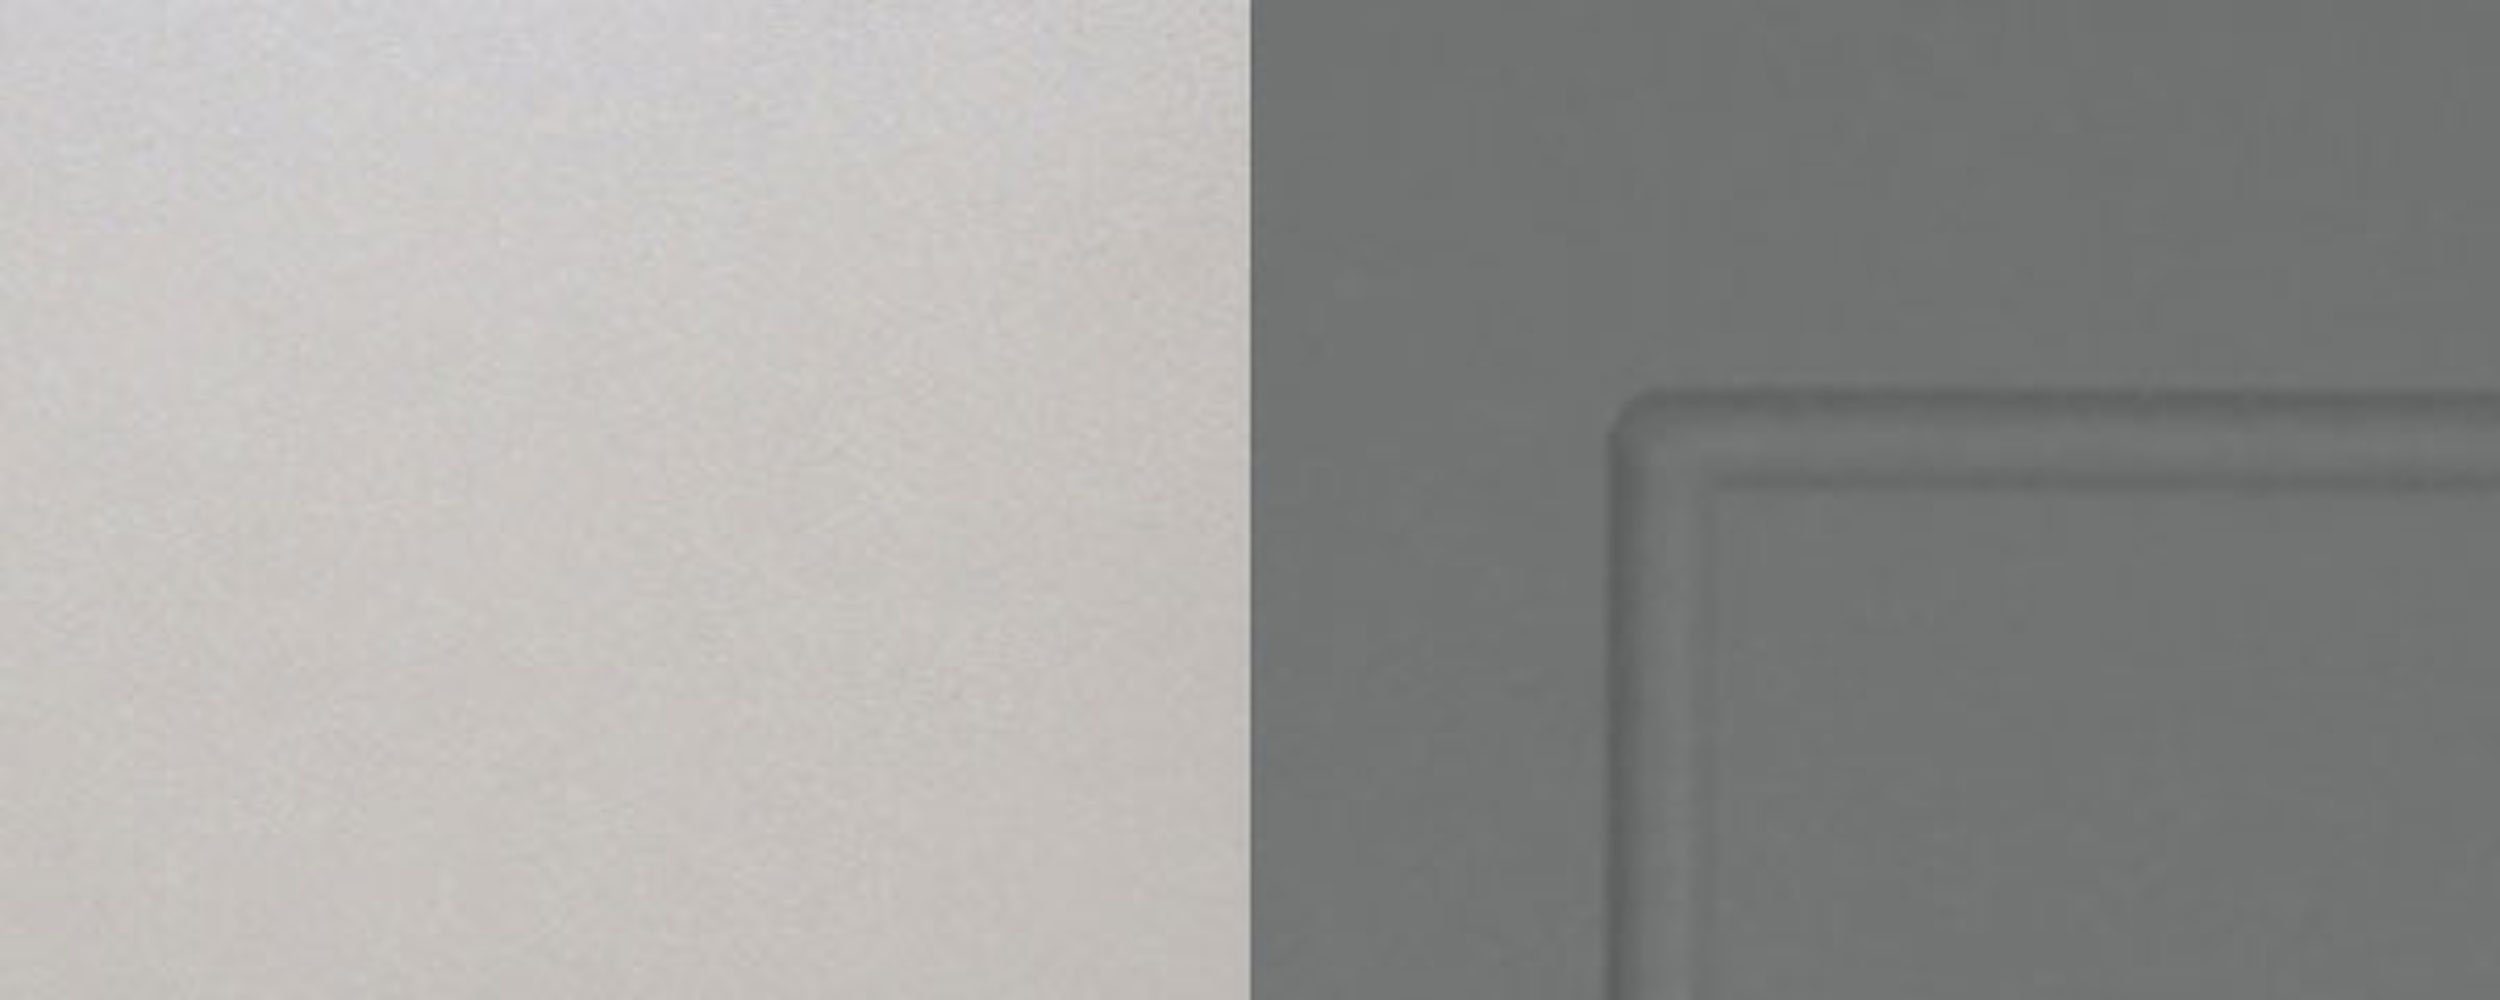 Feldmann-Wohnen Klapphängeschrank Kvantum 60cm wählbar grey matt (Kvantum) Front- 2-türig dust und Korpusfarbe